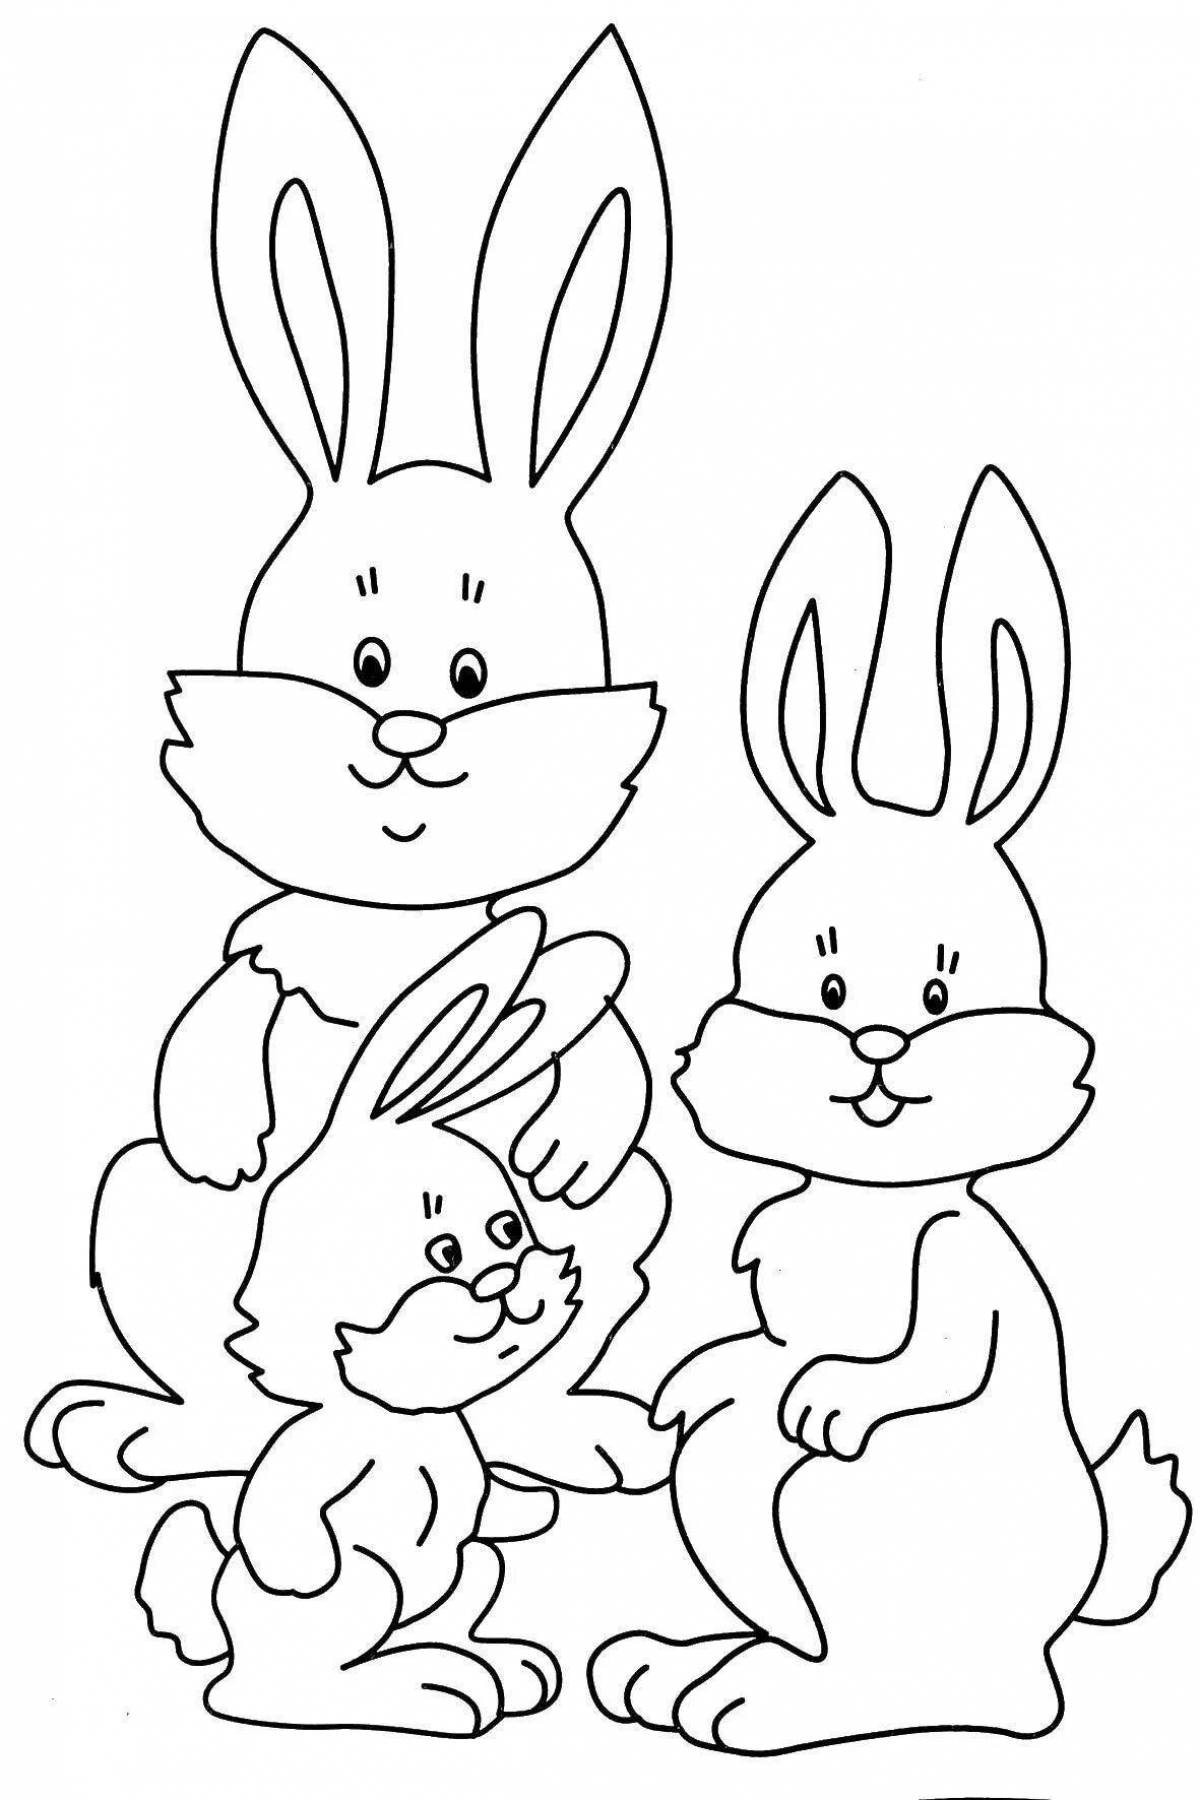 Joyful coloring page rabbit drawing